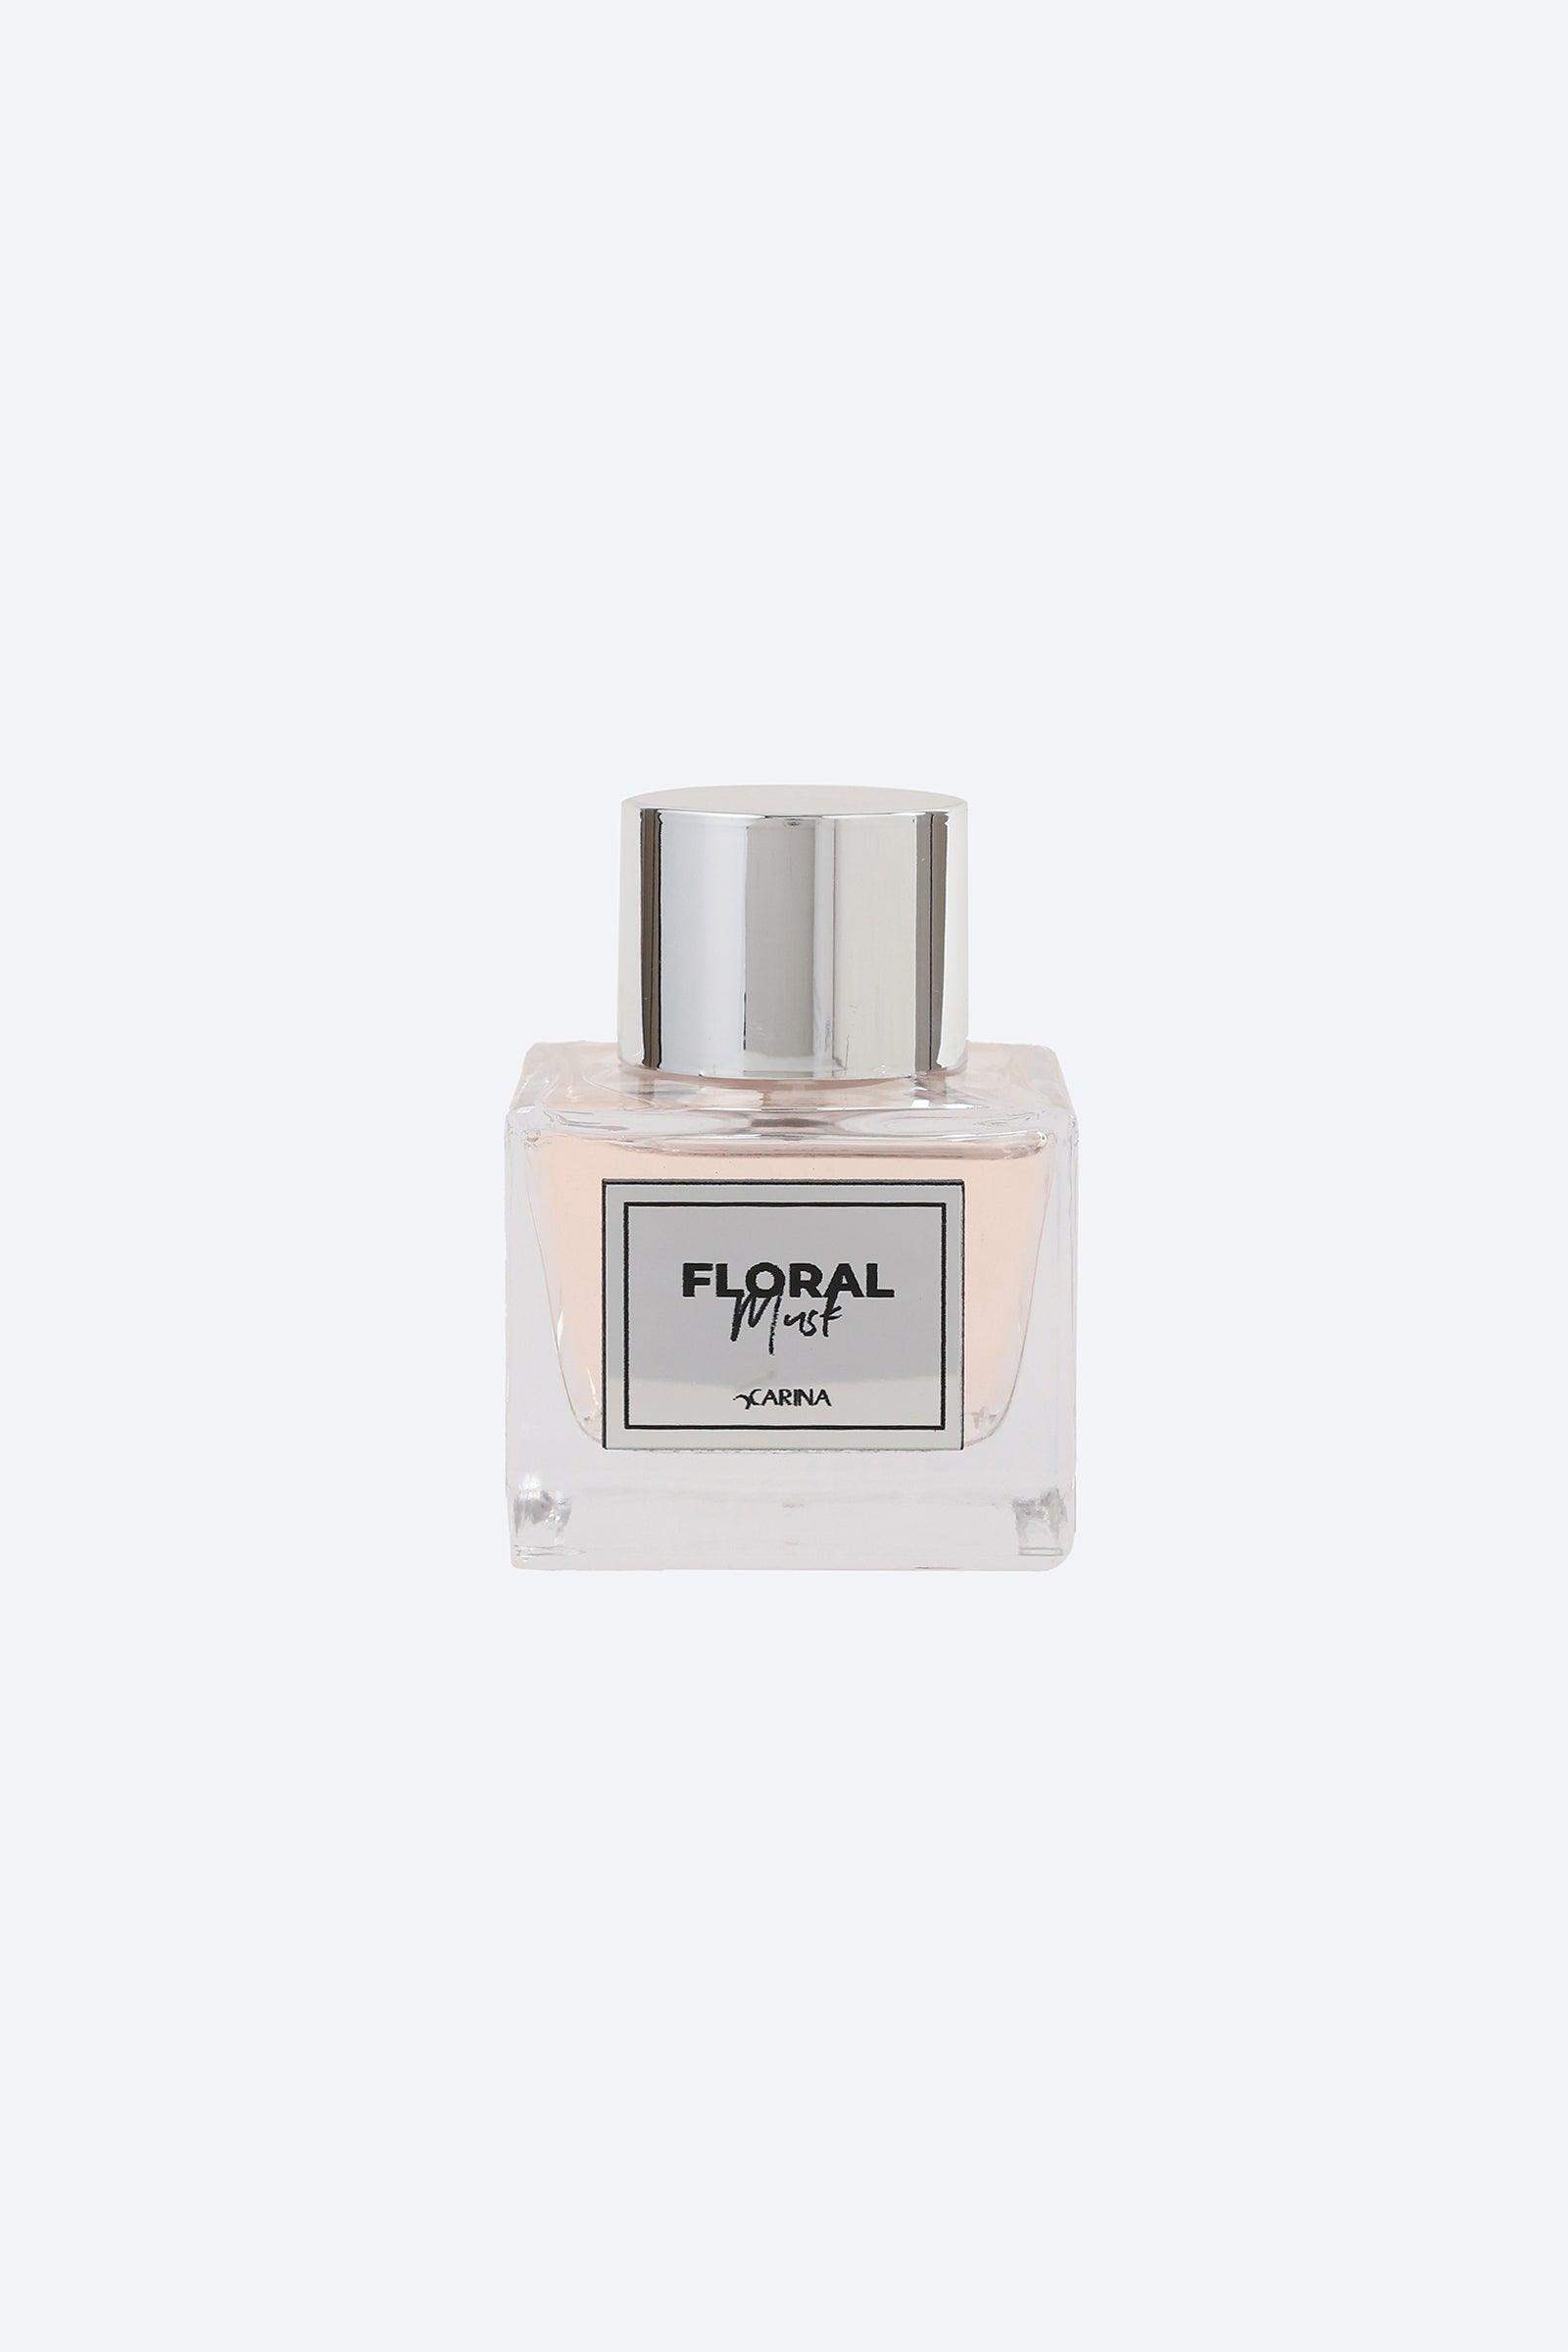 Floral Musk Perfume - 100ml - Carina - كارينا